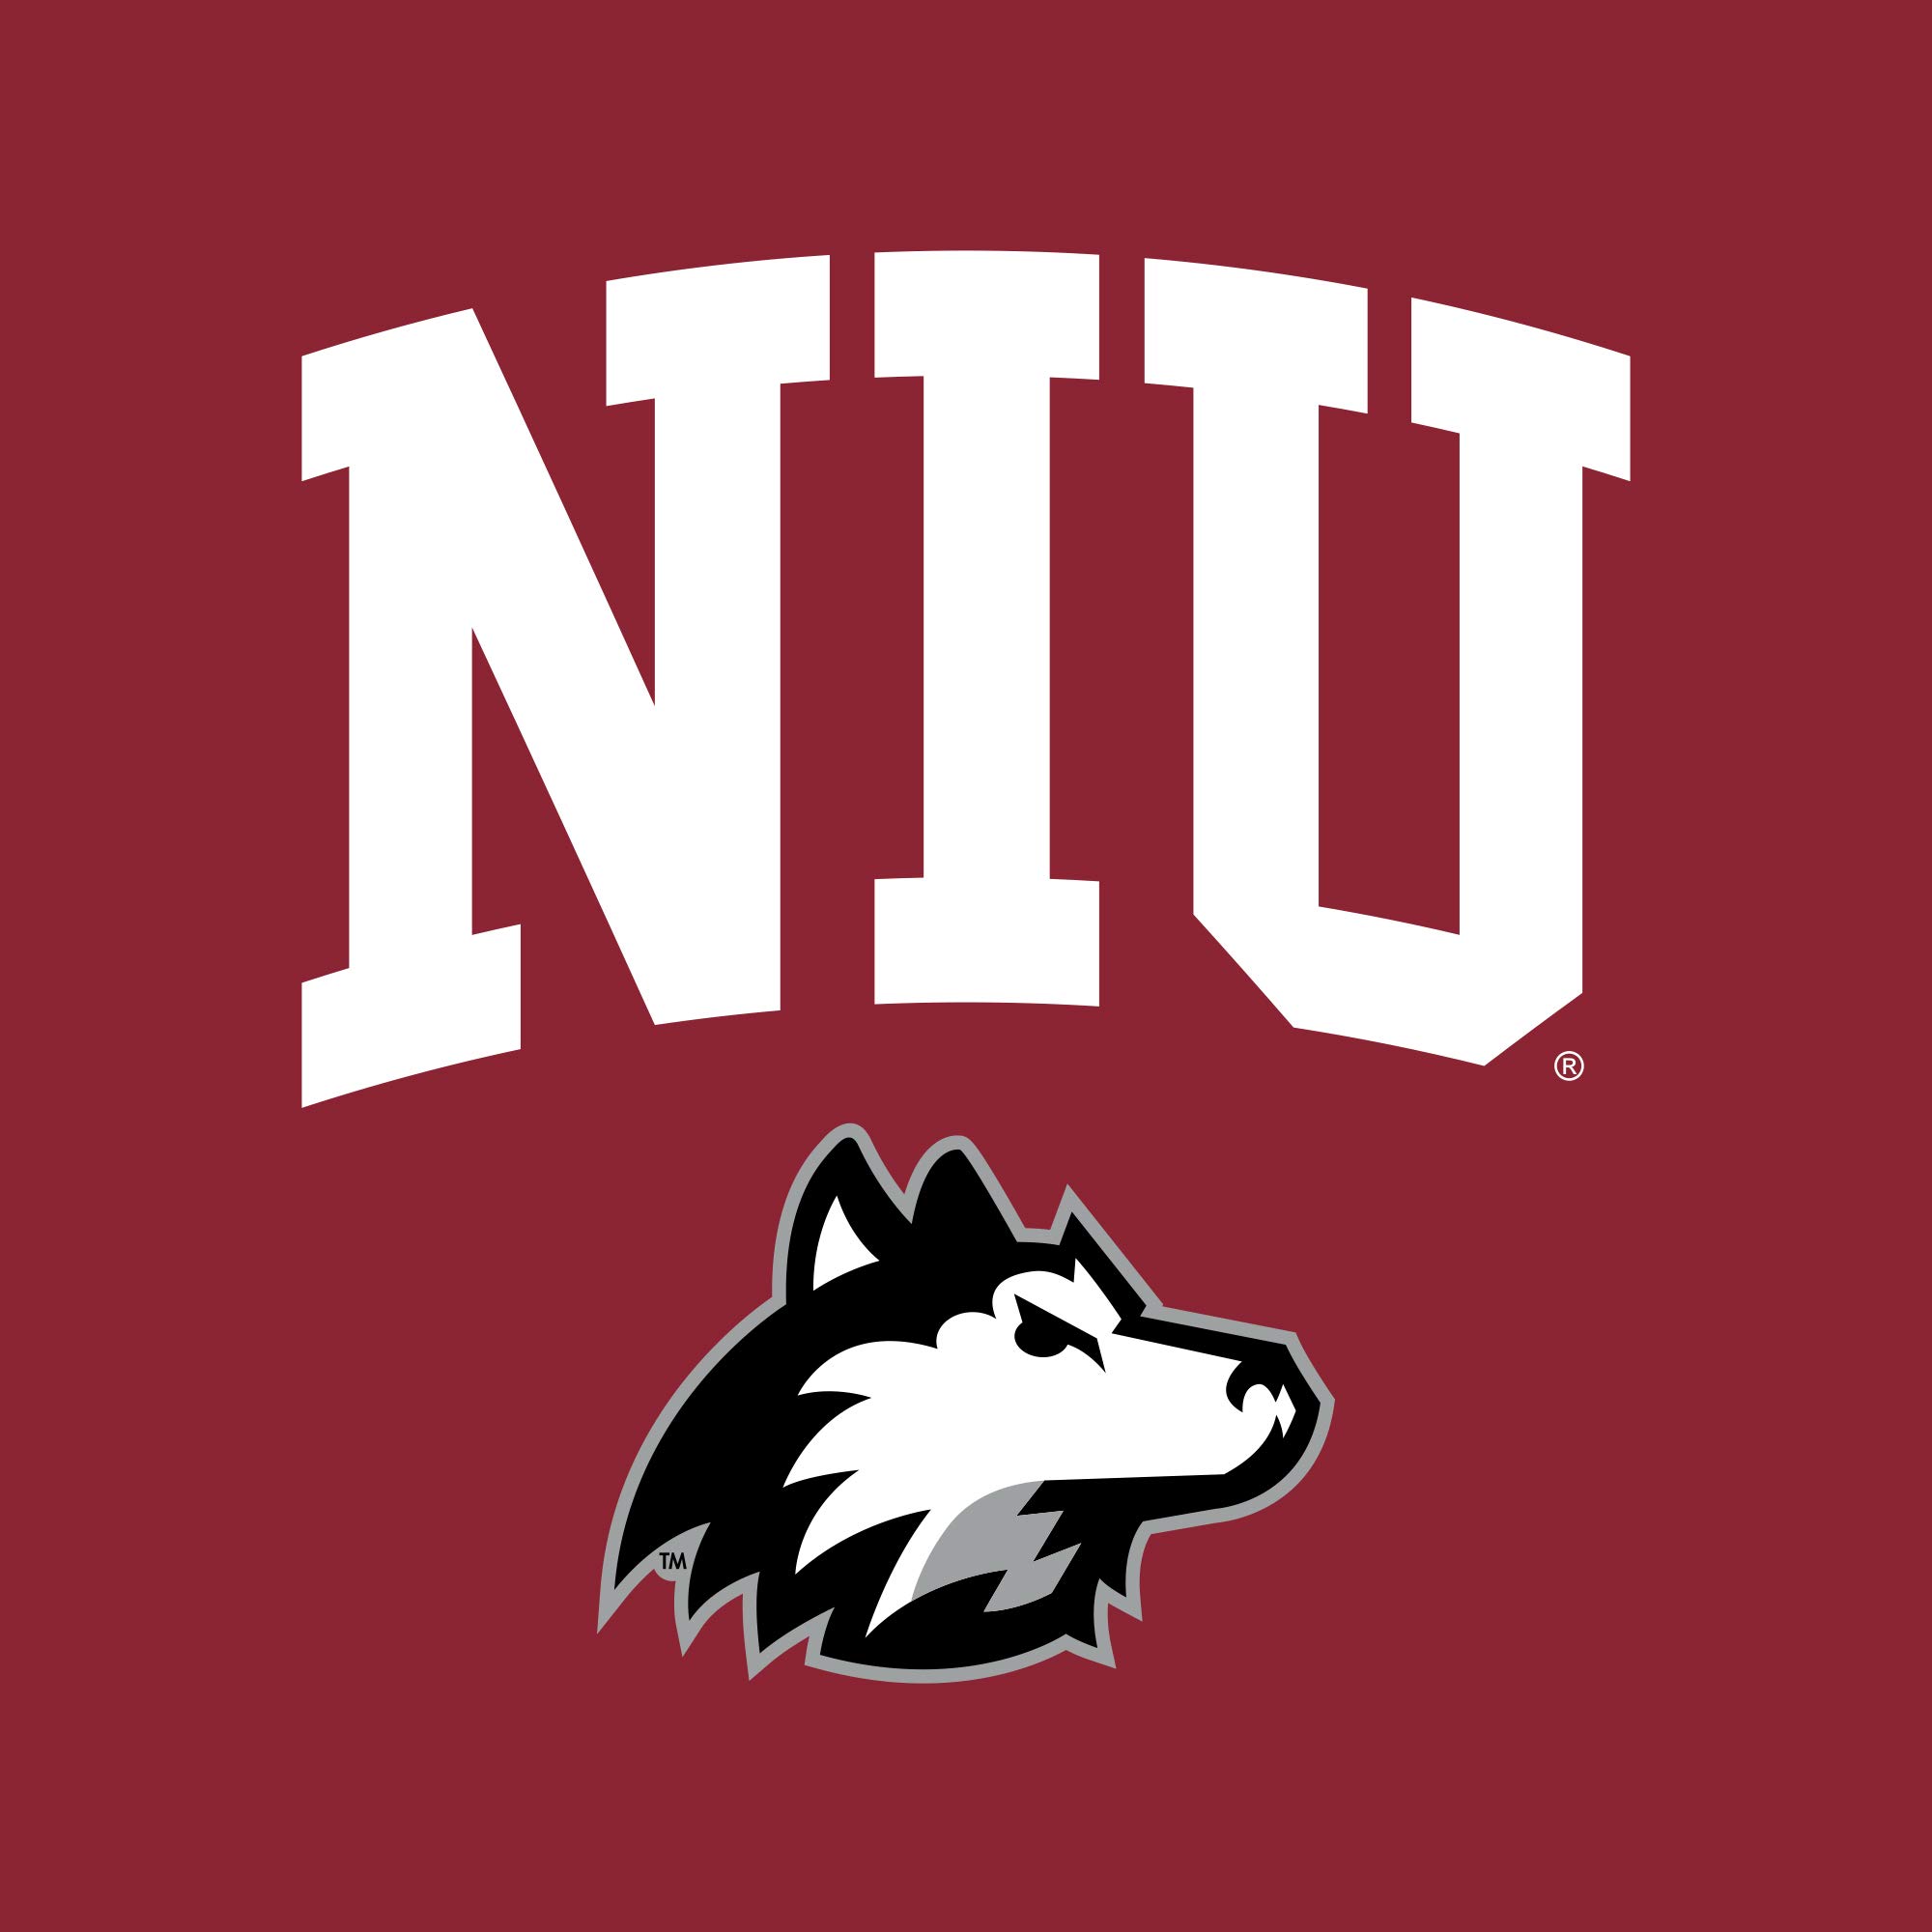 NCAA Arch Logo, Team Color T Shirt, College, University